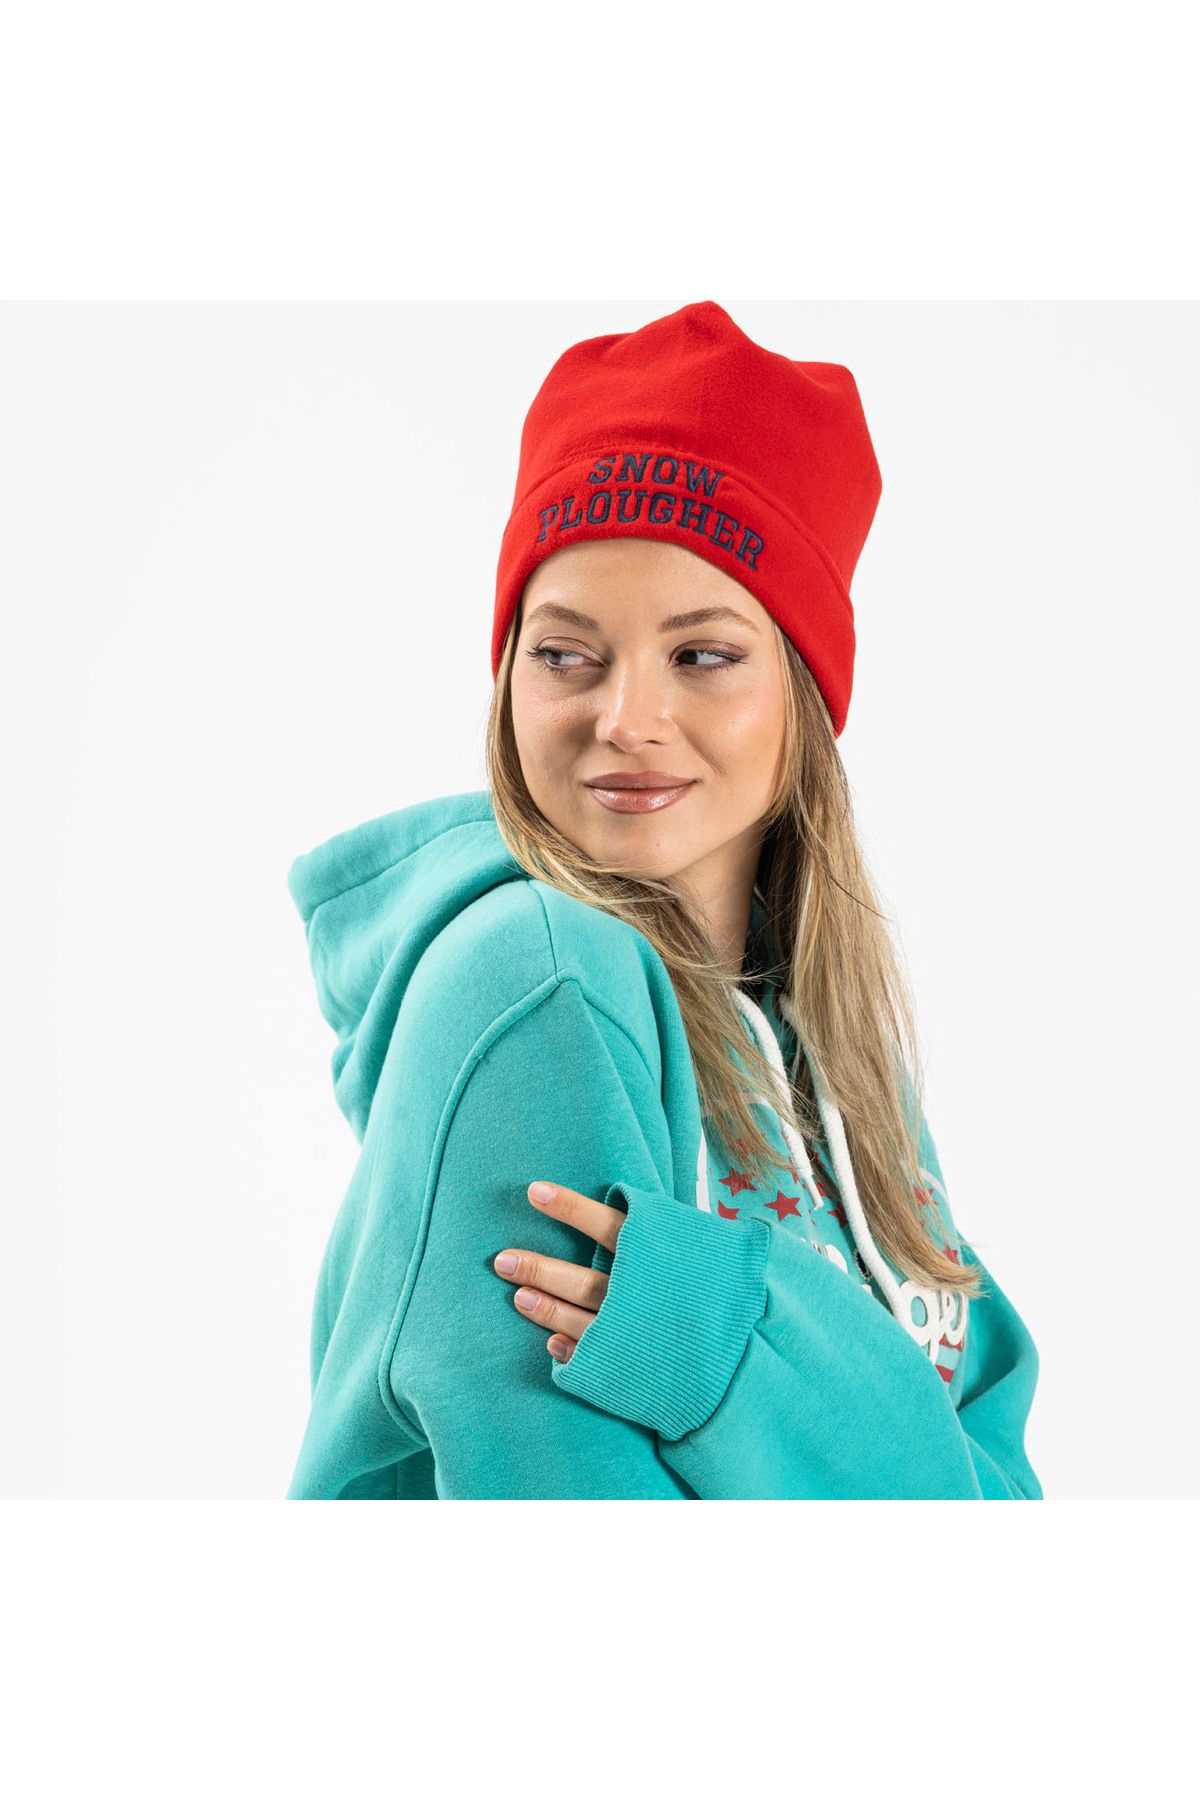 Cosy Club Shop Kadın Kırmızı Snow Plougher Sloganlı Polar Bere